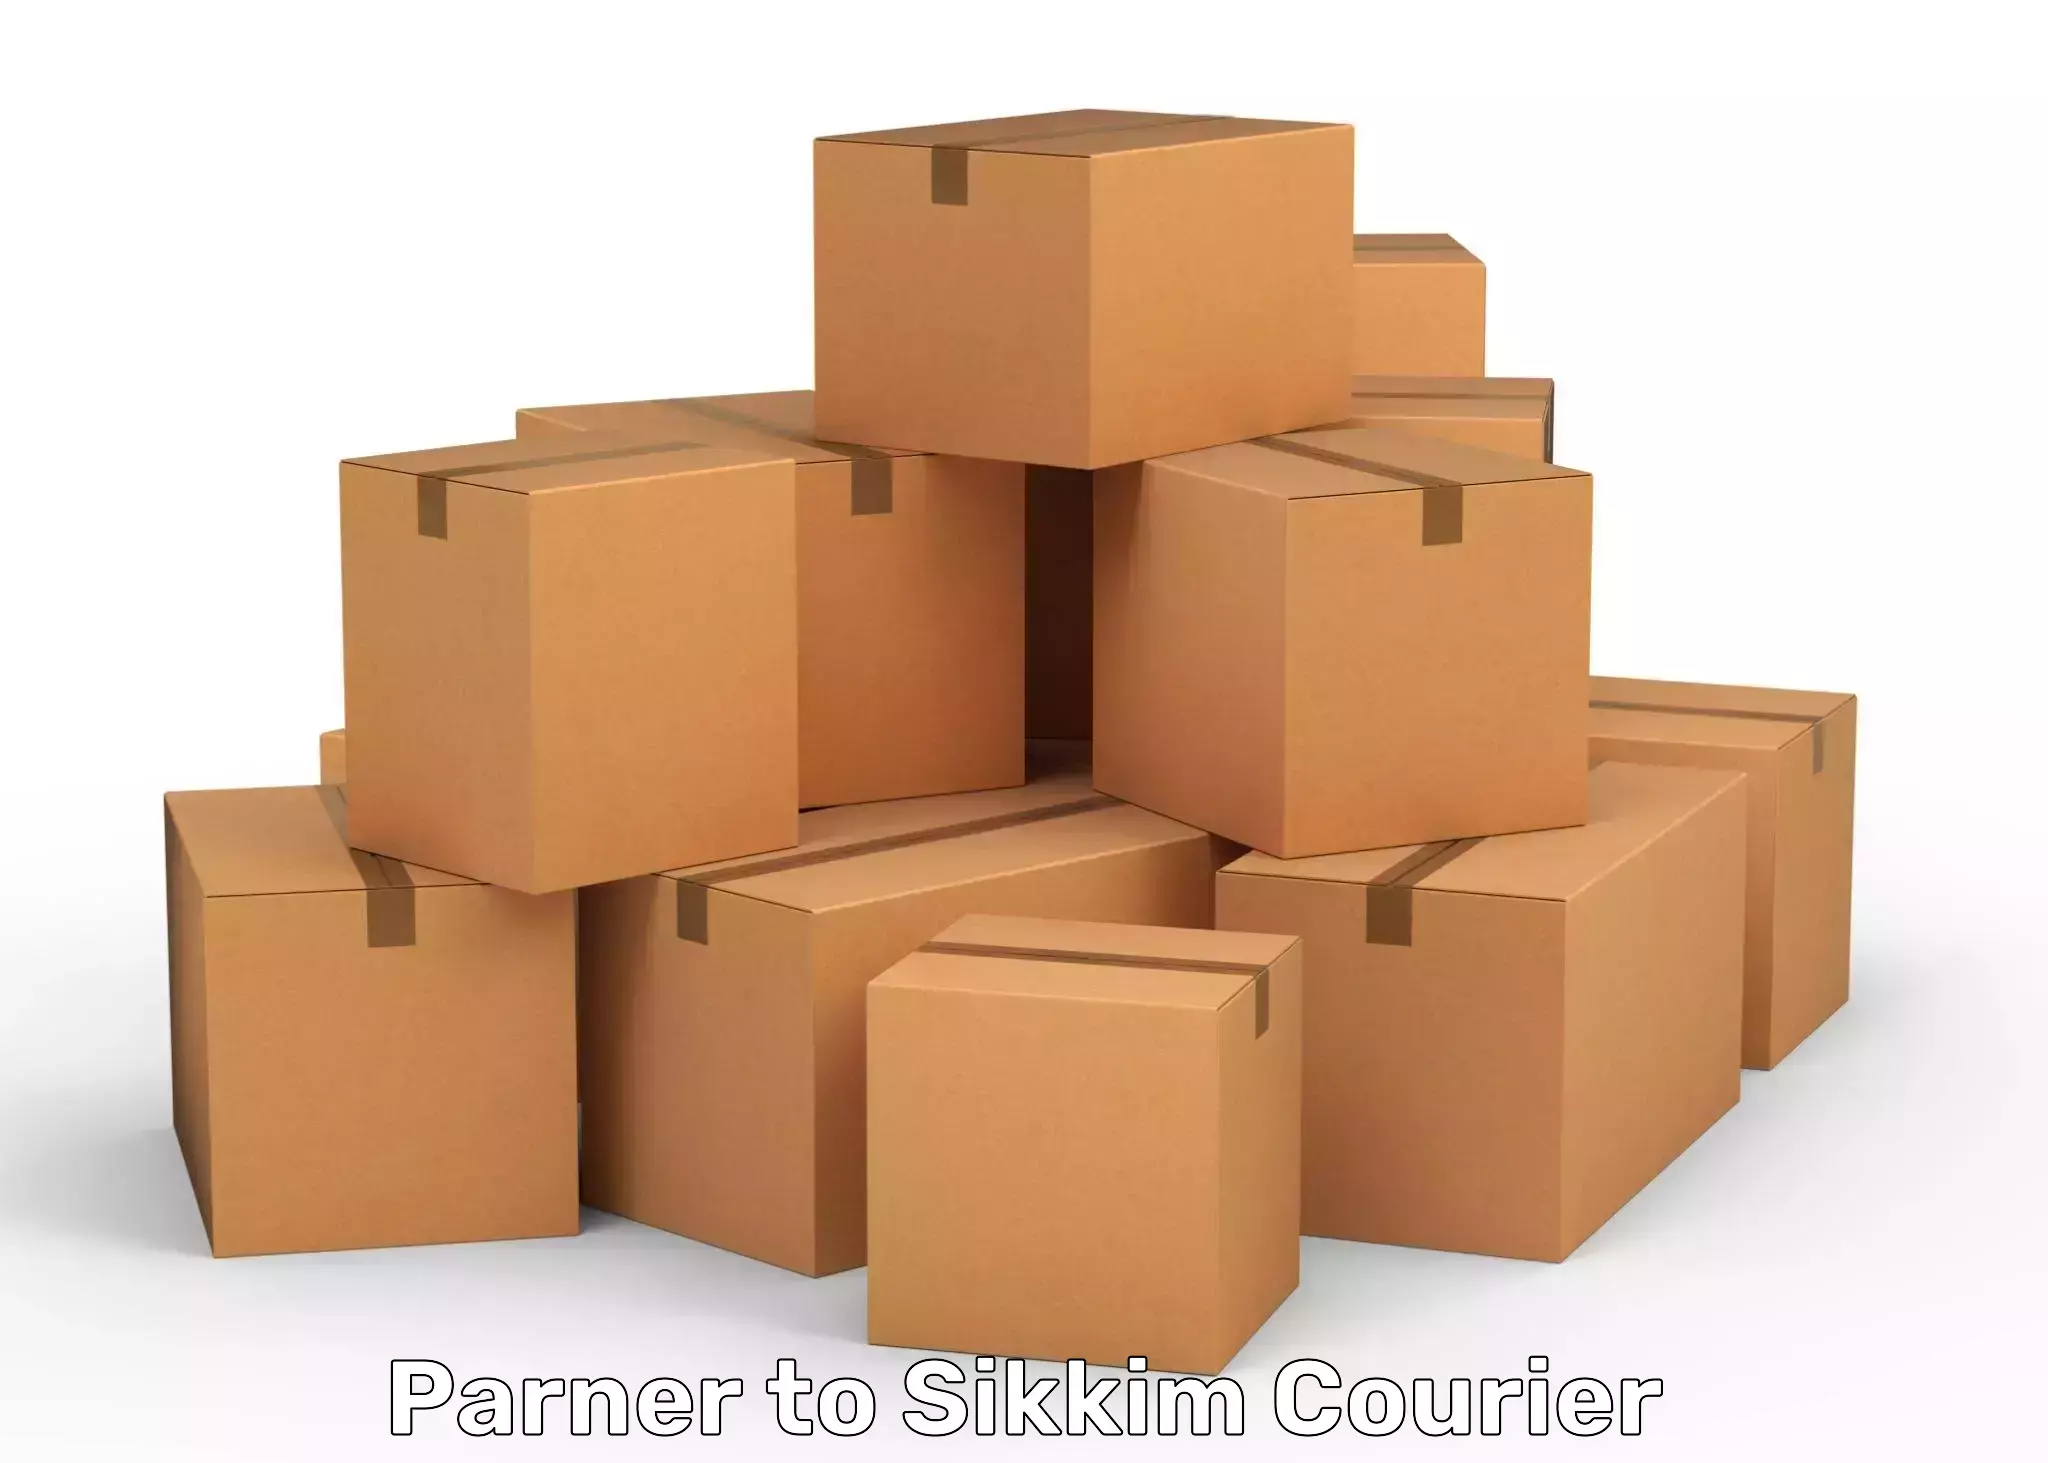 Customer-centric shipping Parner to Ranipool